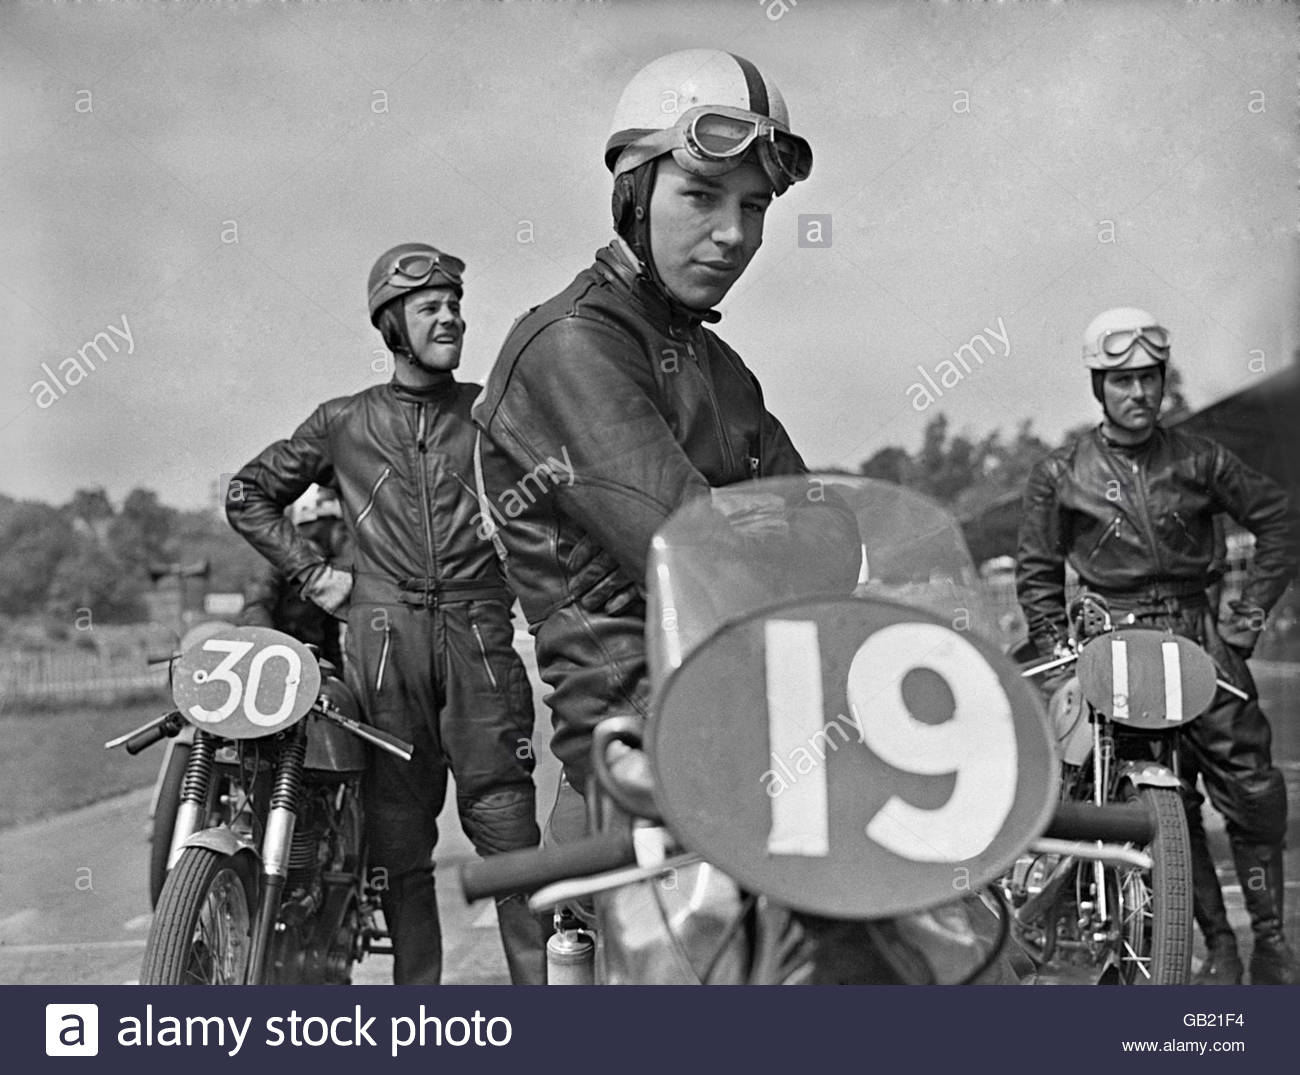 John Surtees and his bike.